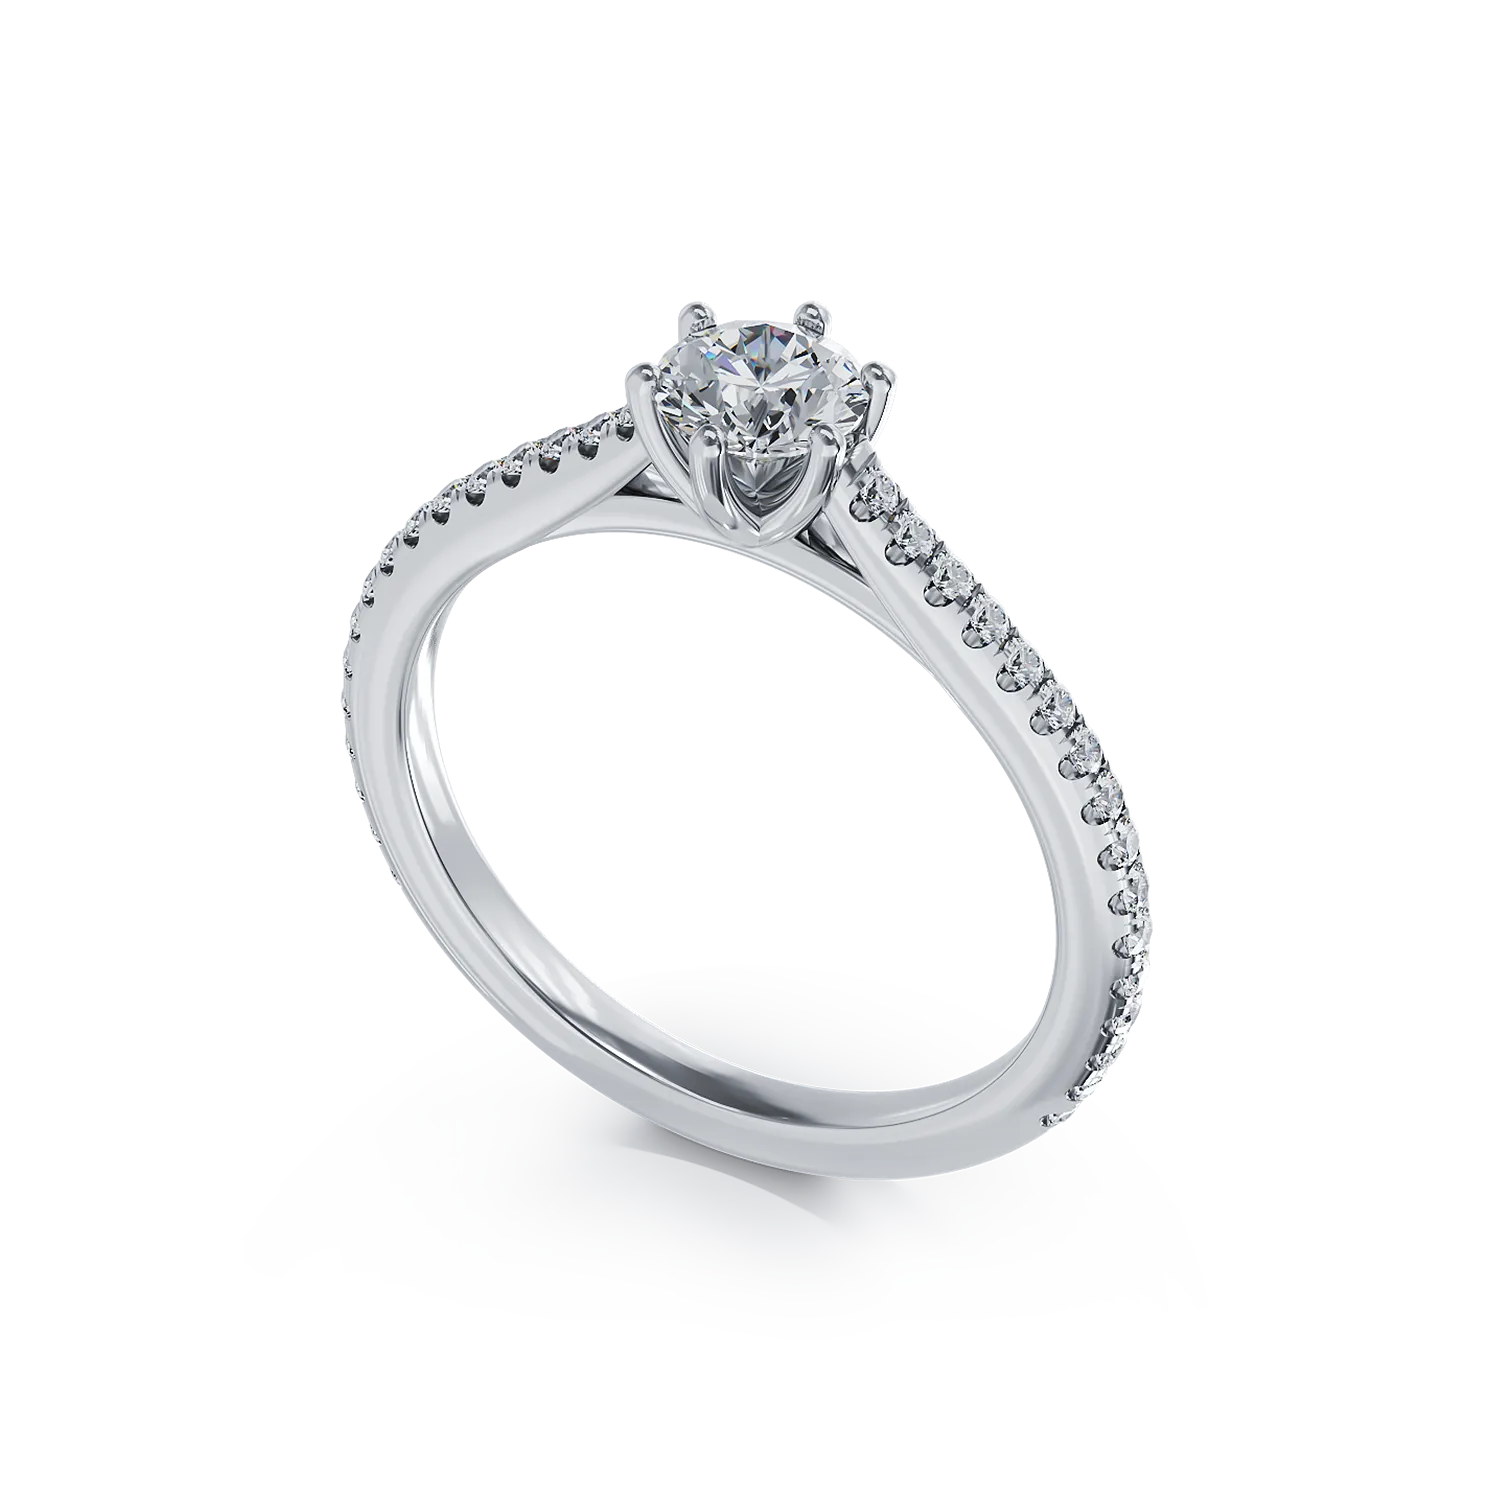 Platinum engagement ring with 0.4ct diamond and 0.18ct diamonds